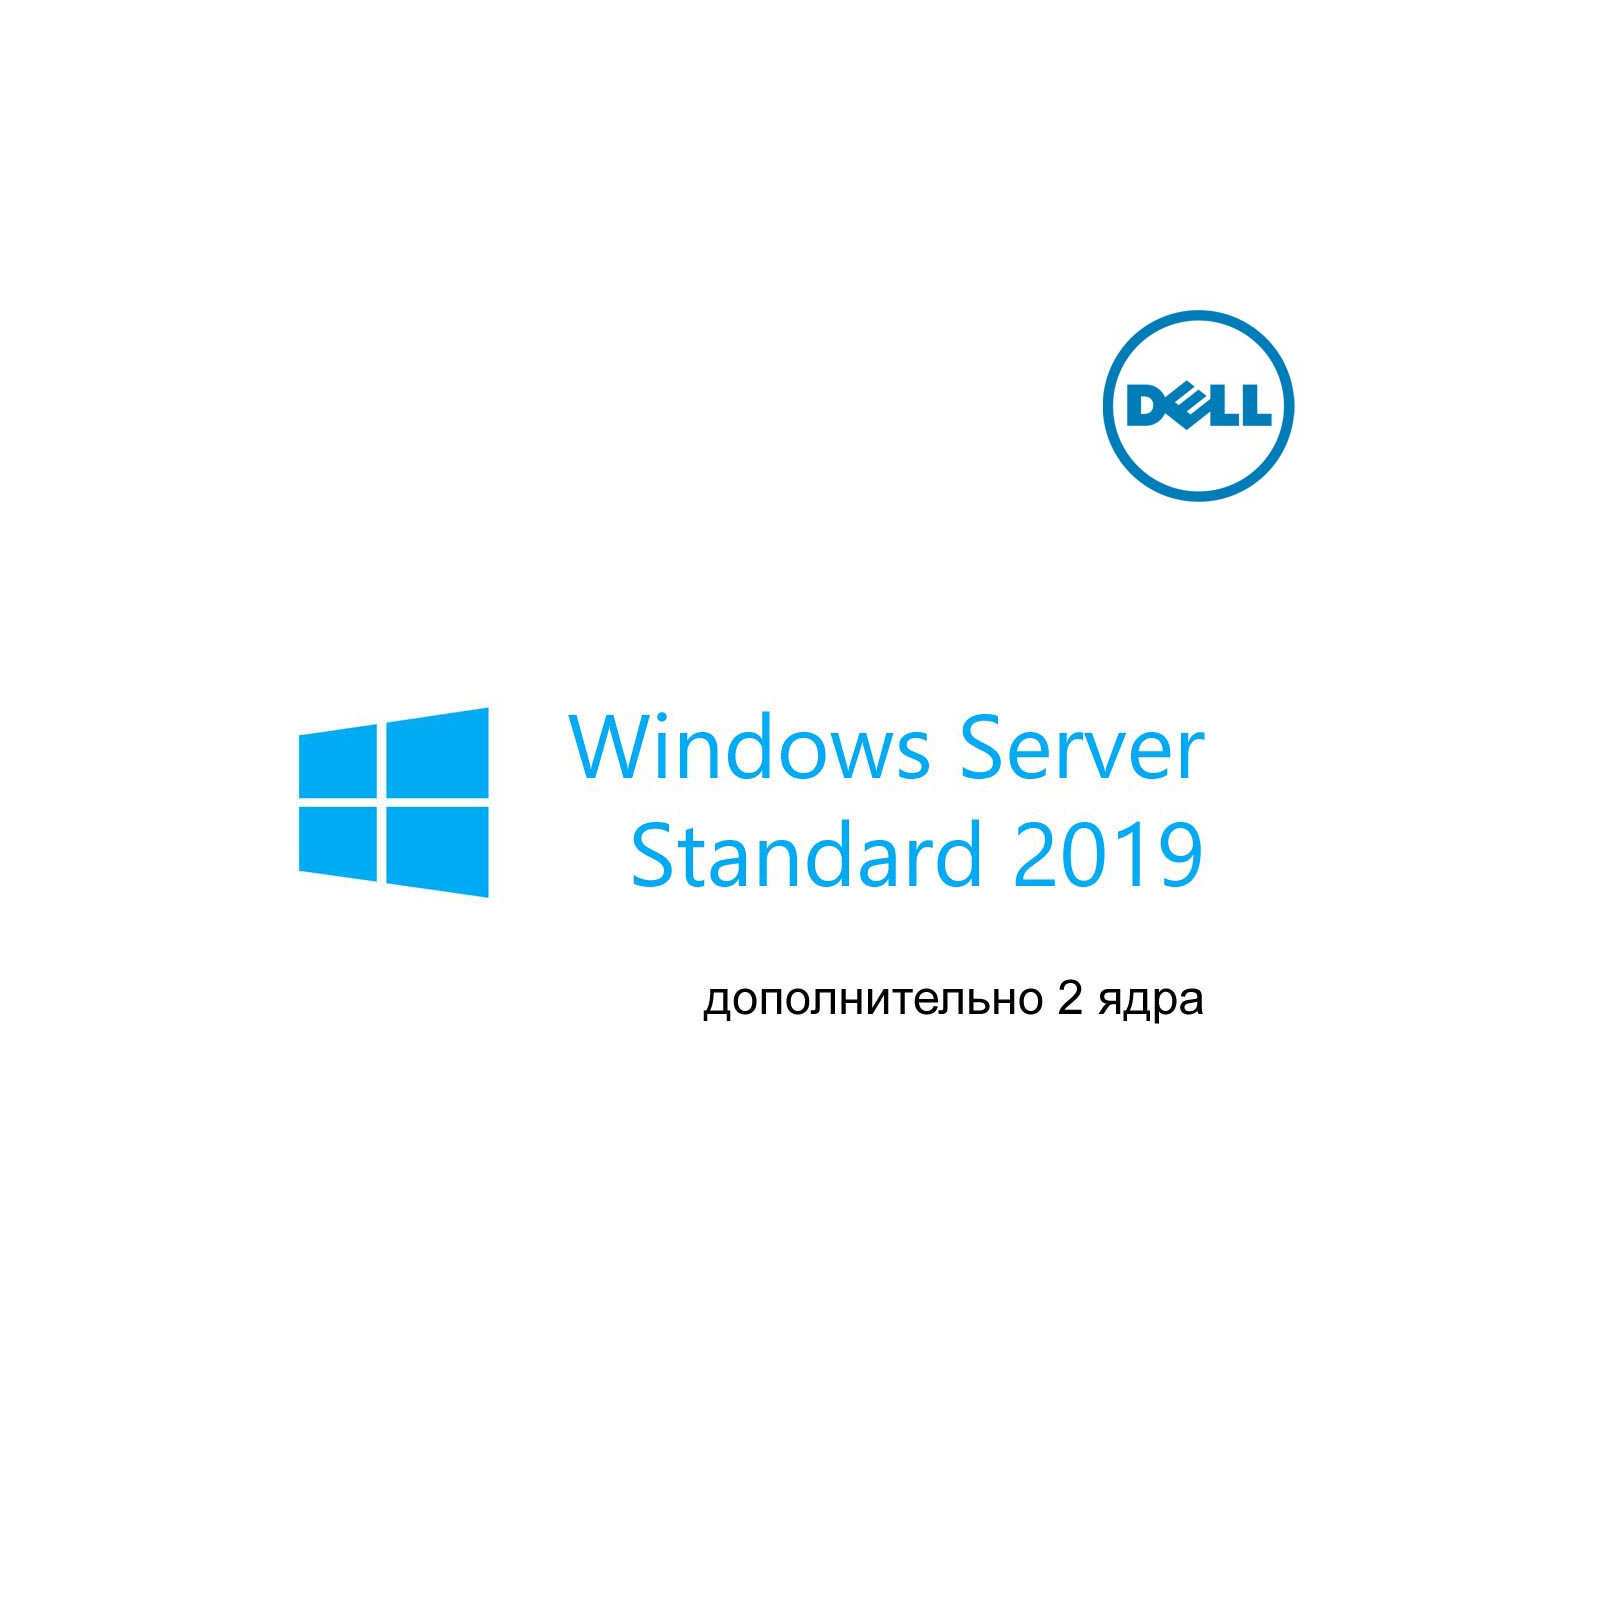 ПЗ для сервера Dell Windows Server 2019 Standard Additional 2 Cores RO (634-BSGS)